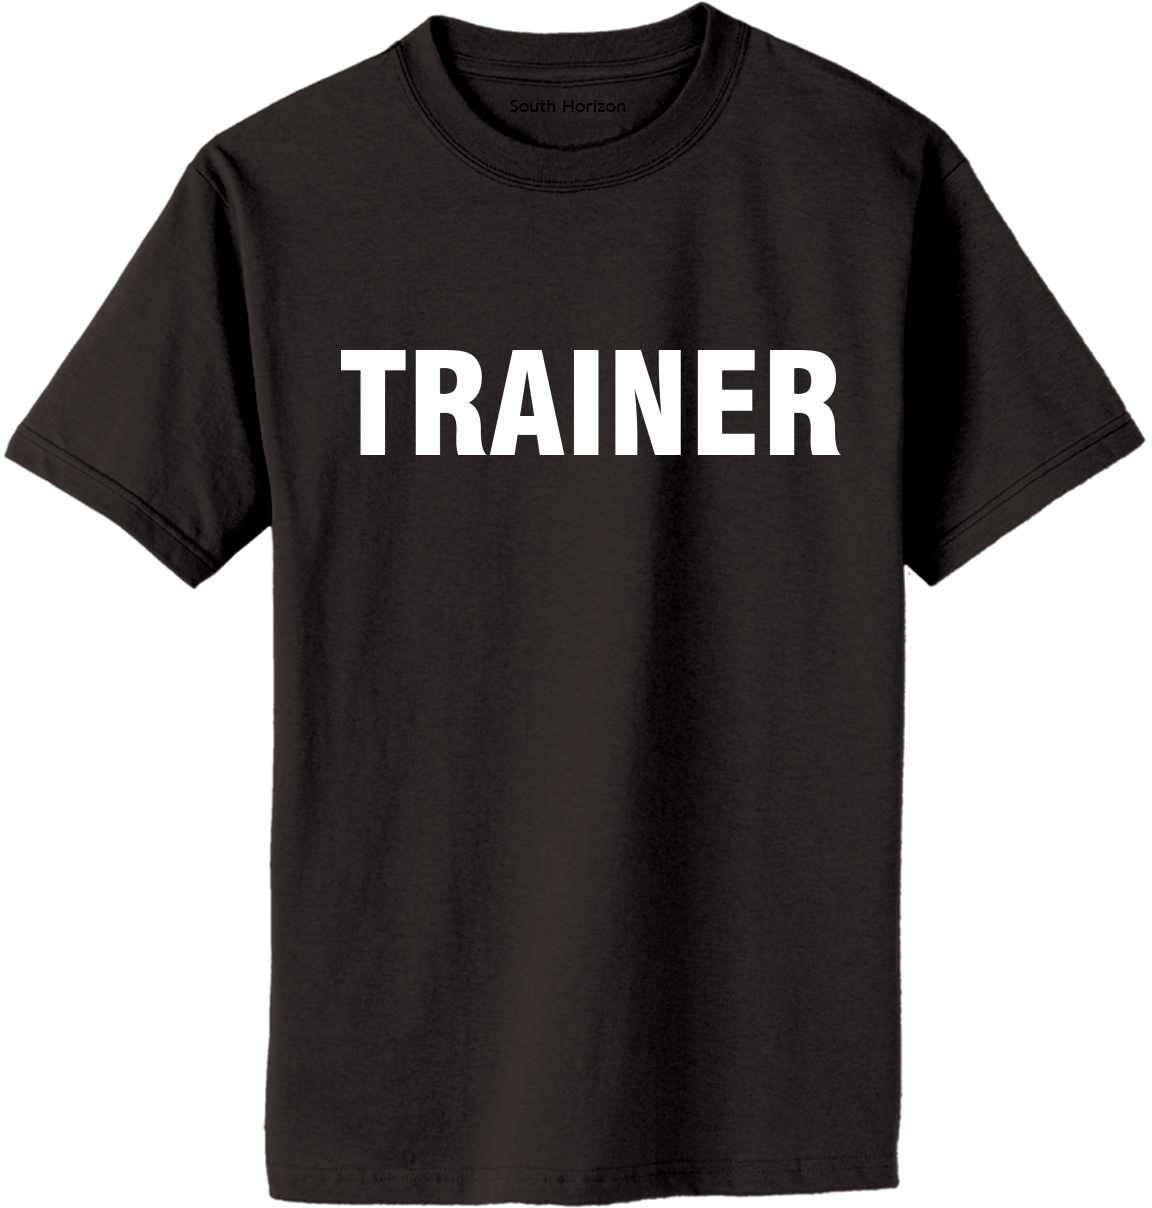 TRAINER Adult T-Shirt